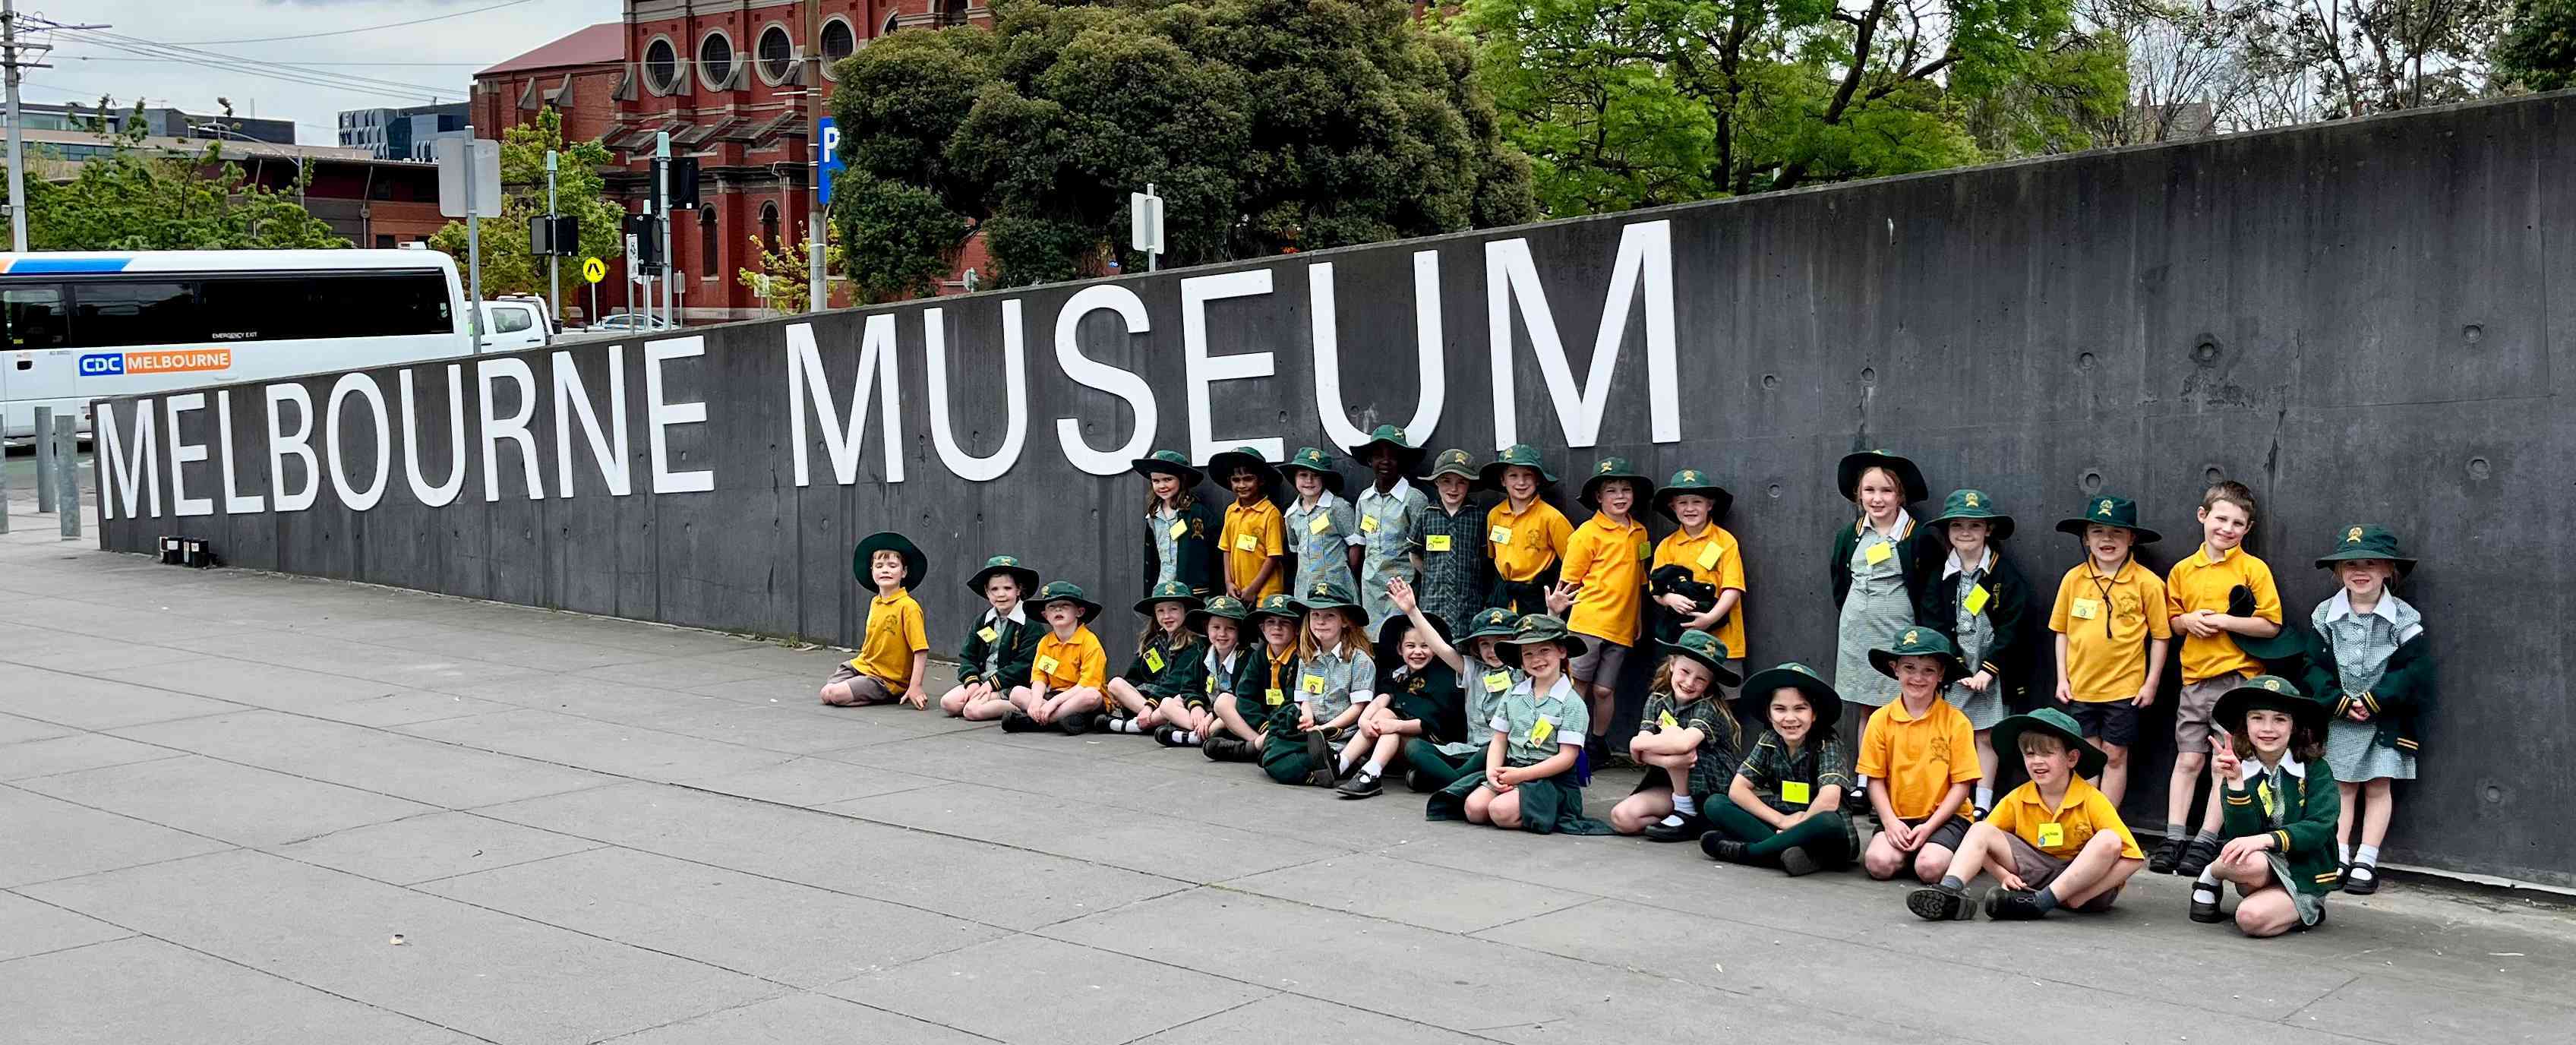 Melbourne Museum image7